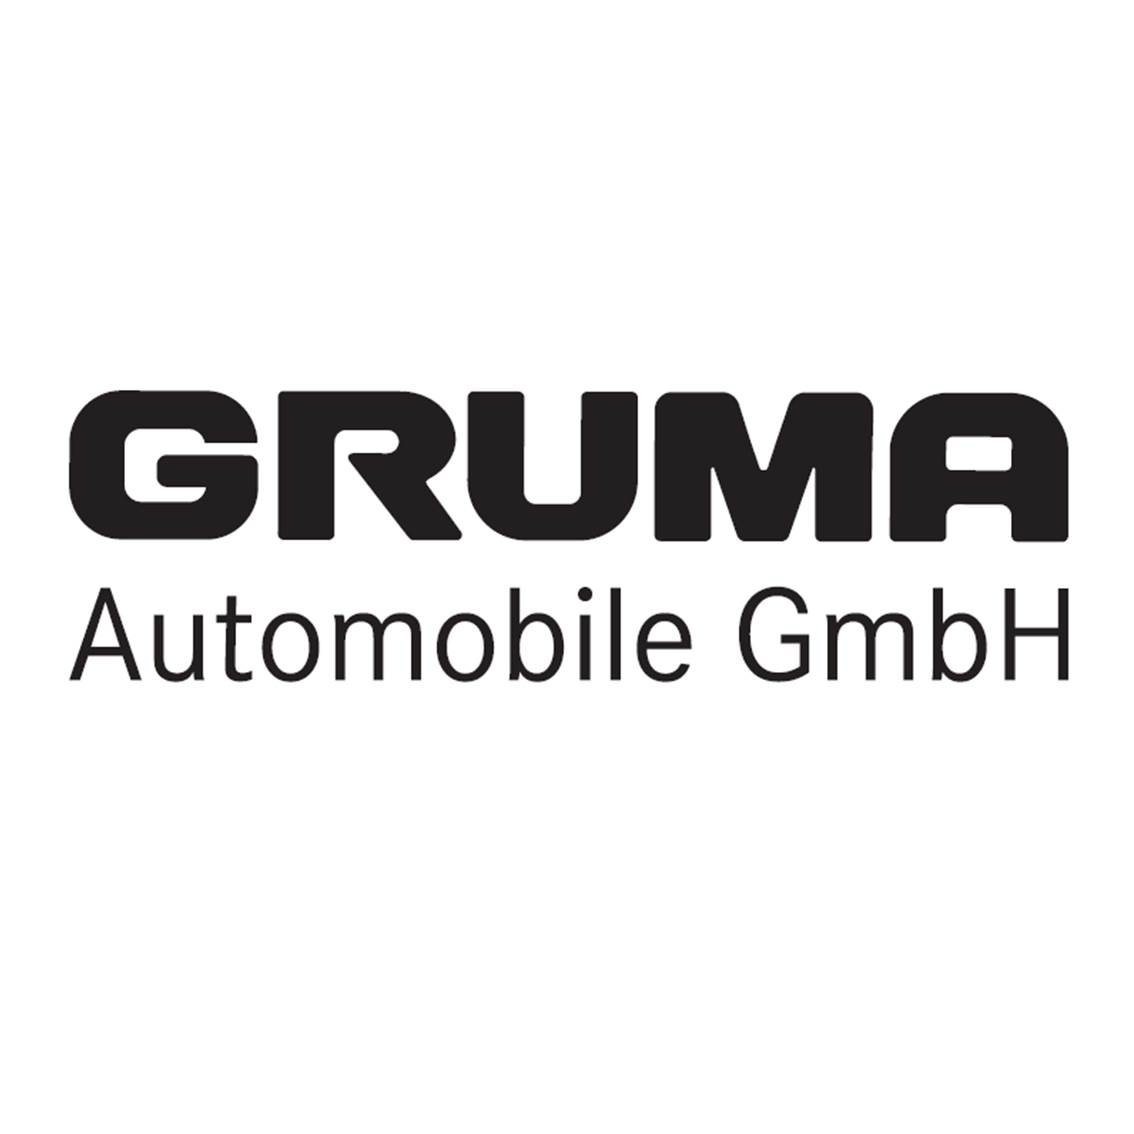 GRUMA Automobile